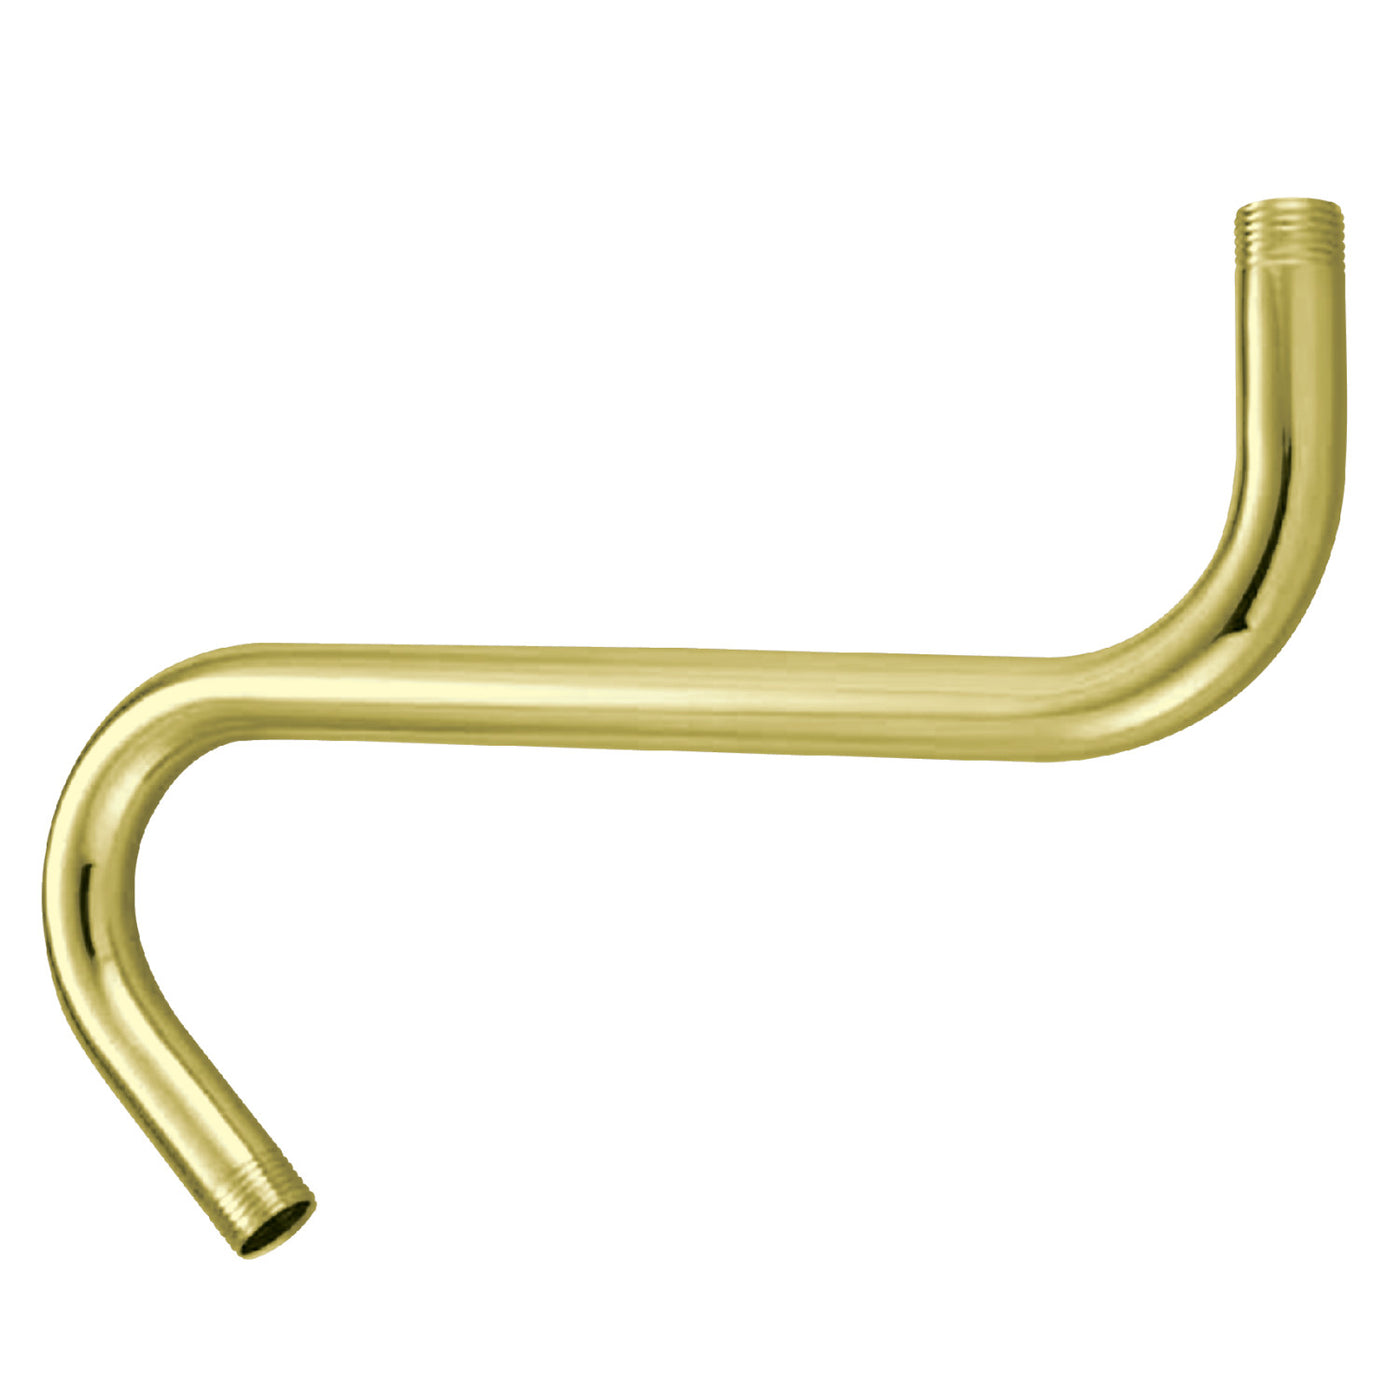 Elements of Design DK152A2 8-Inch S-Shape Shower Arm, Polished Brass